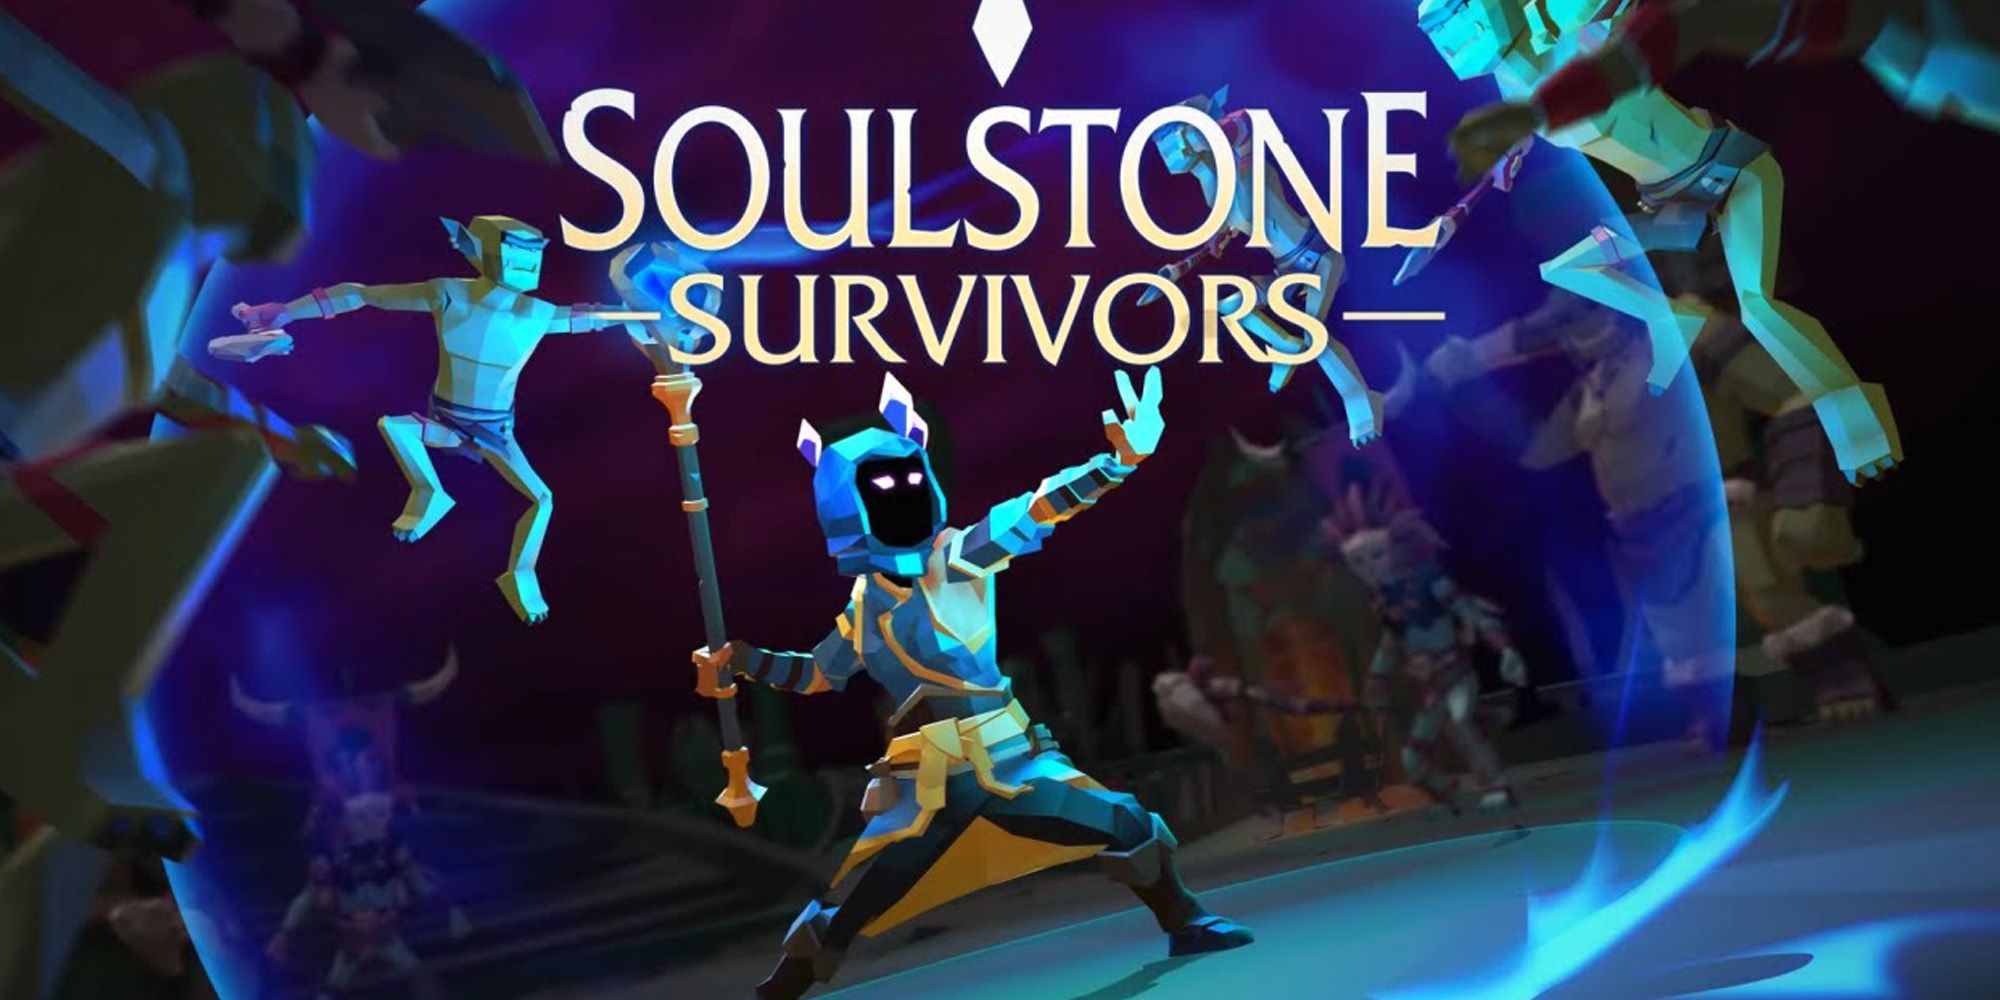 Assassinate! Soulstone Survivors Max Difficulty Build Guide! 